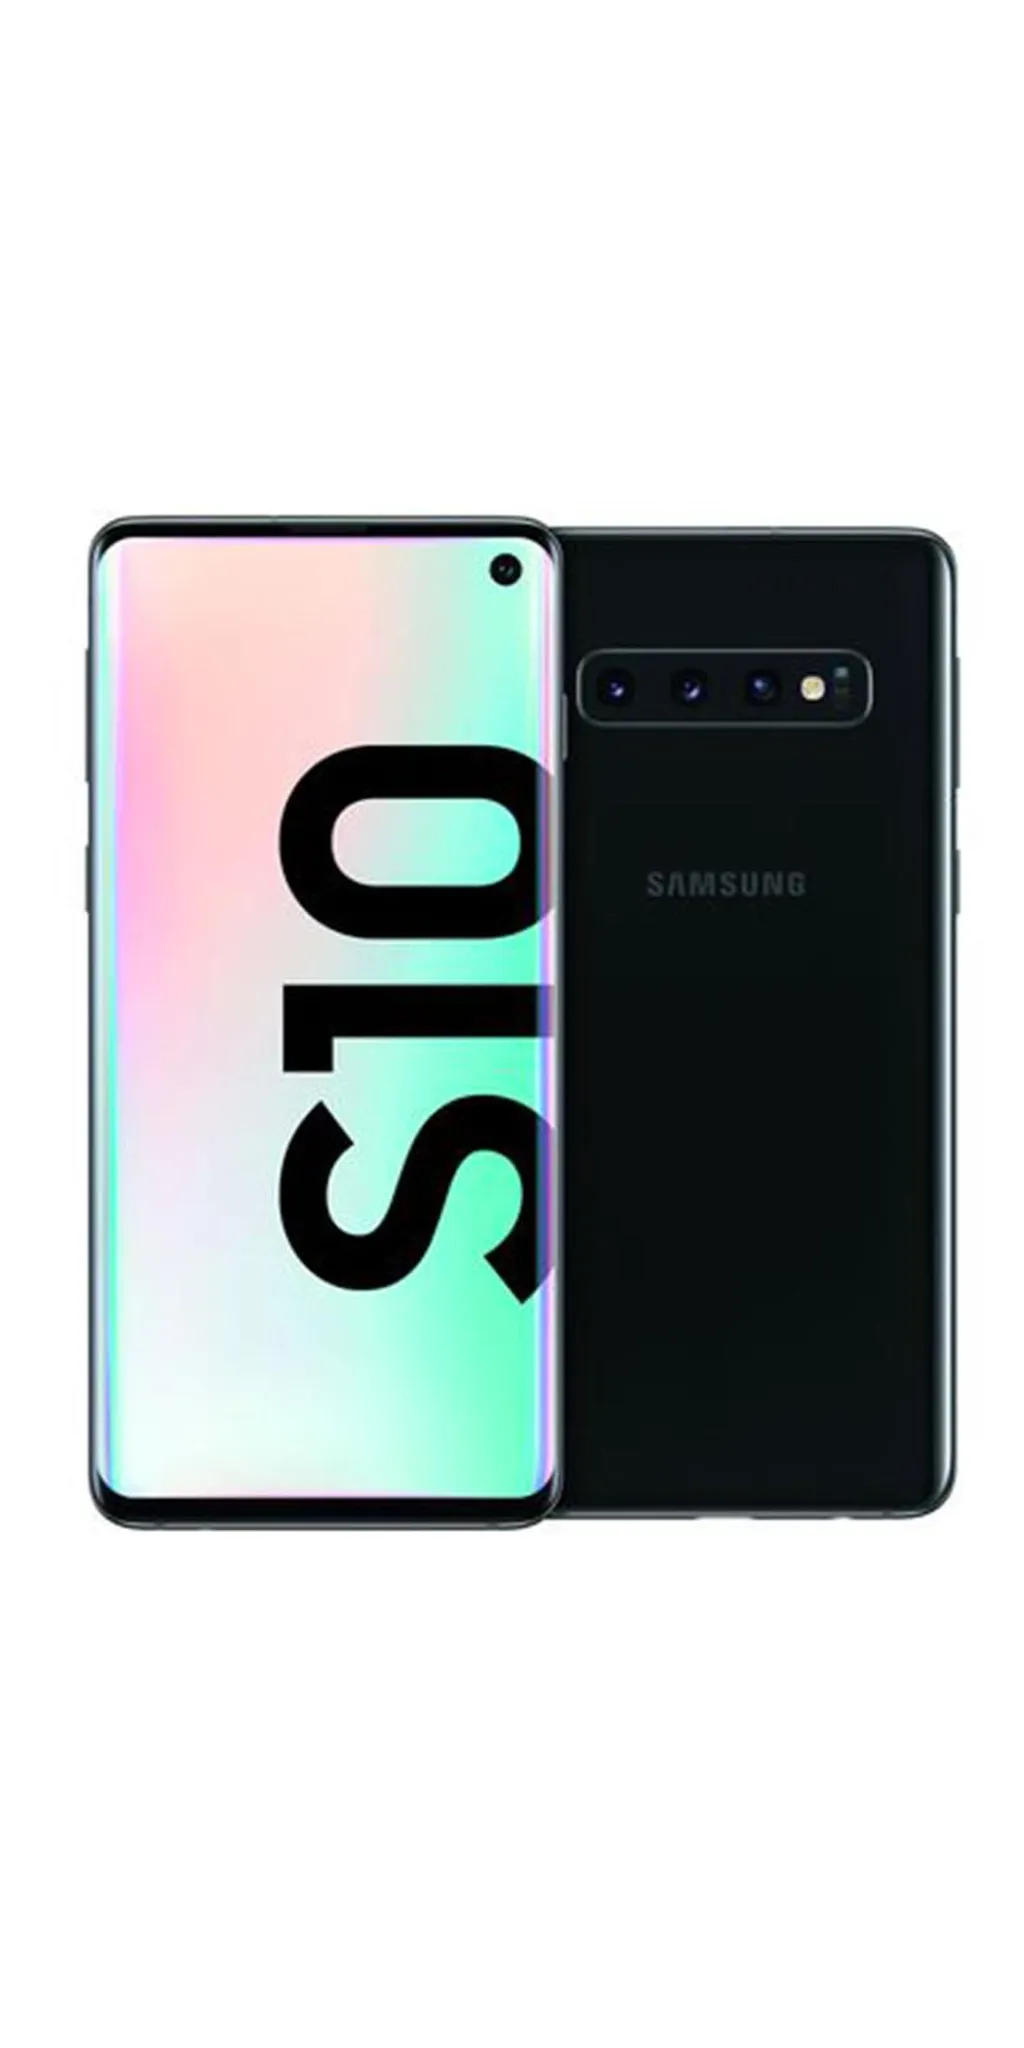 SAMSUNG Smartphone Galaxy S10 128GB SM-G973